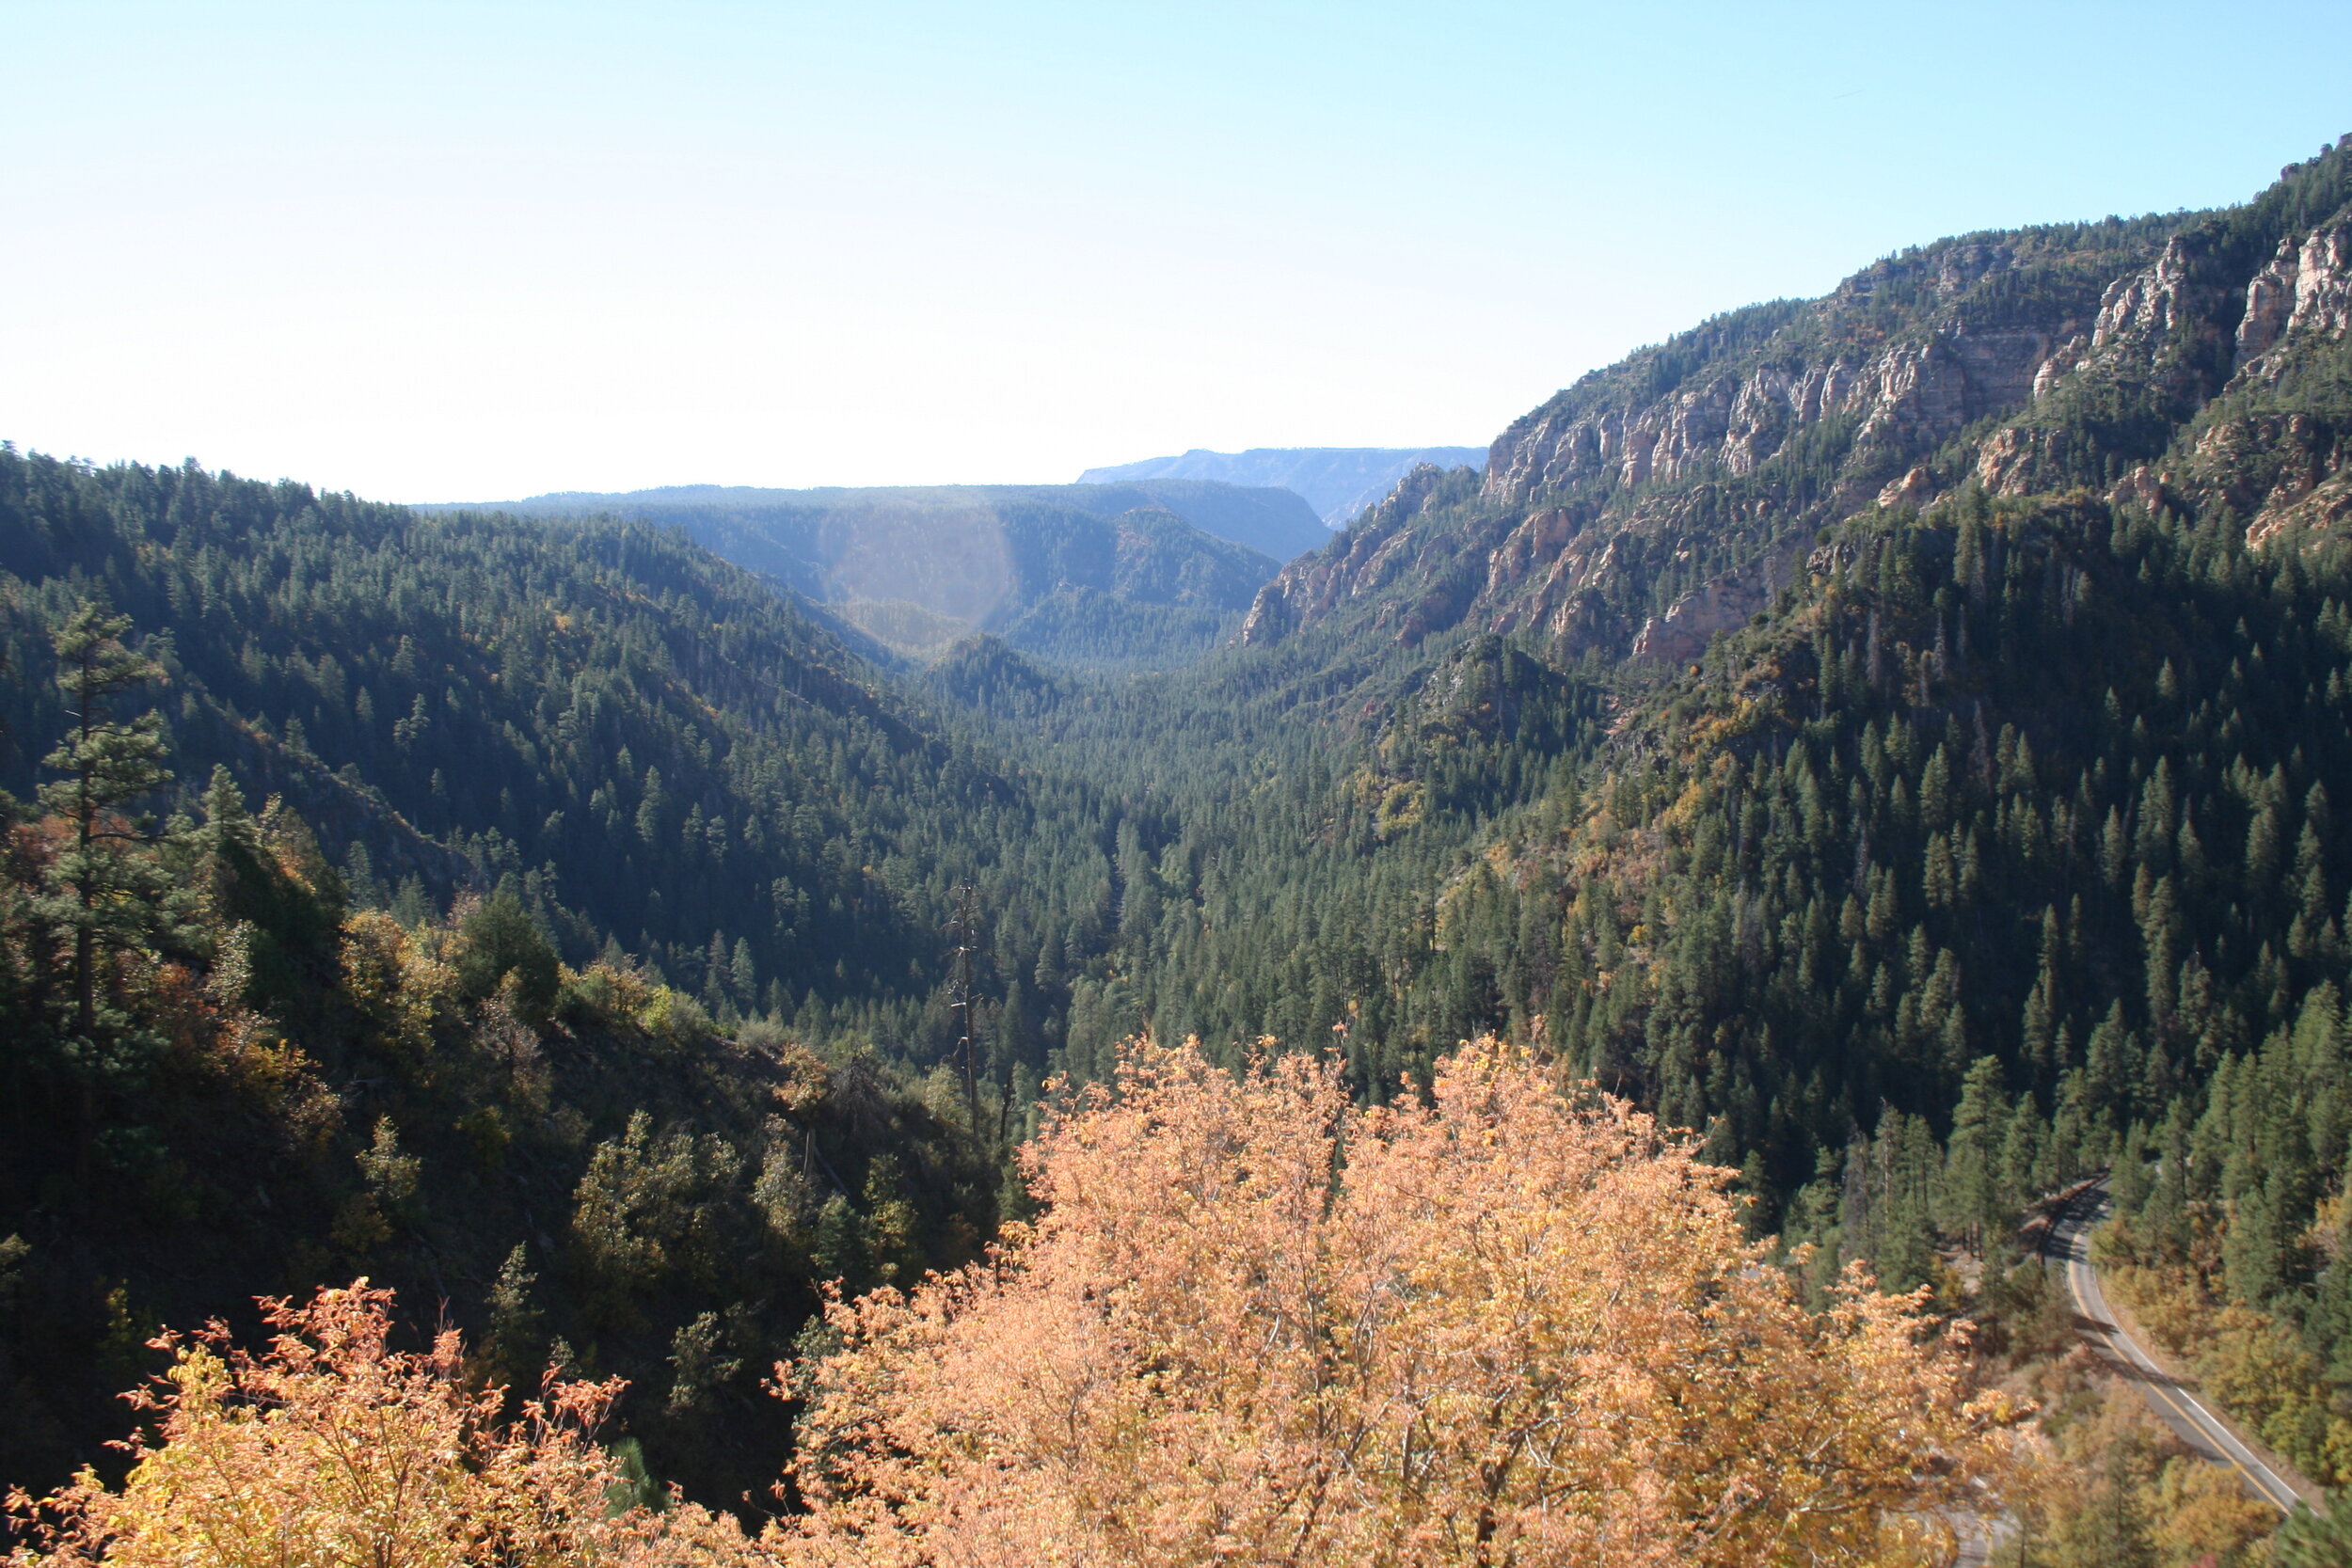   Oak Creek Canyon as seen on our way south.  